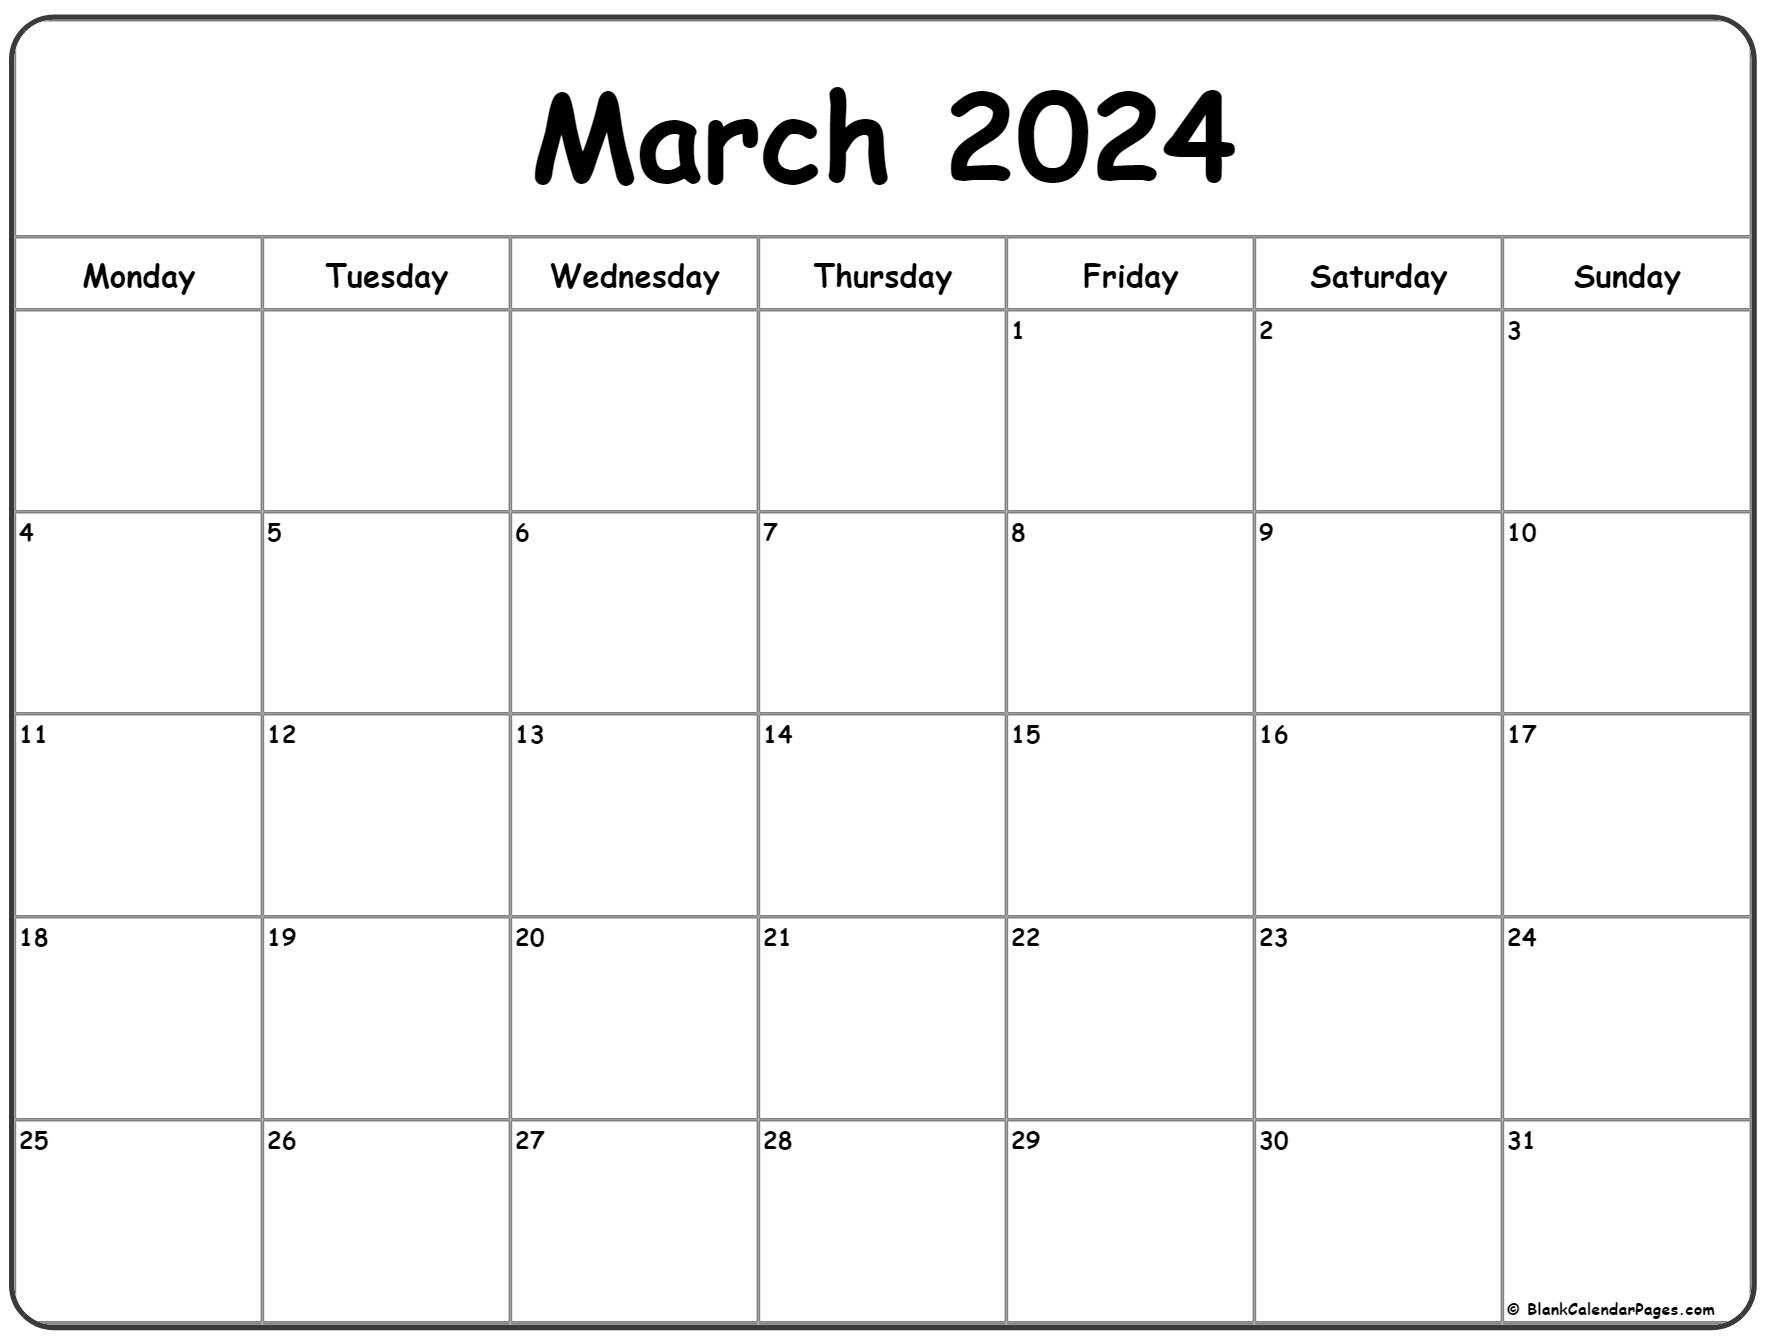 Print March 2022 Calendar March 2022 Monday Calendar | Monday To Sunday